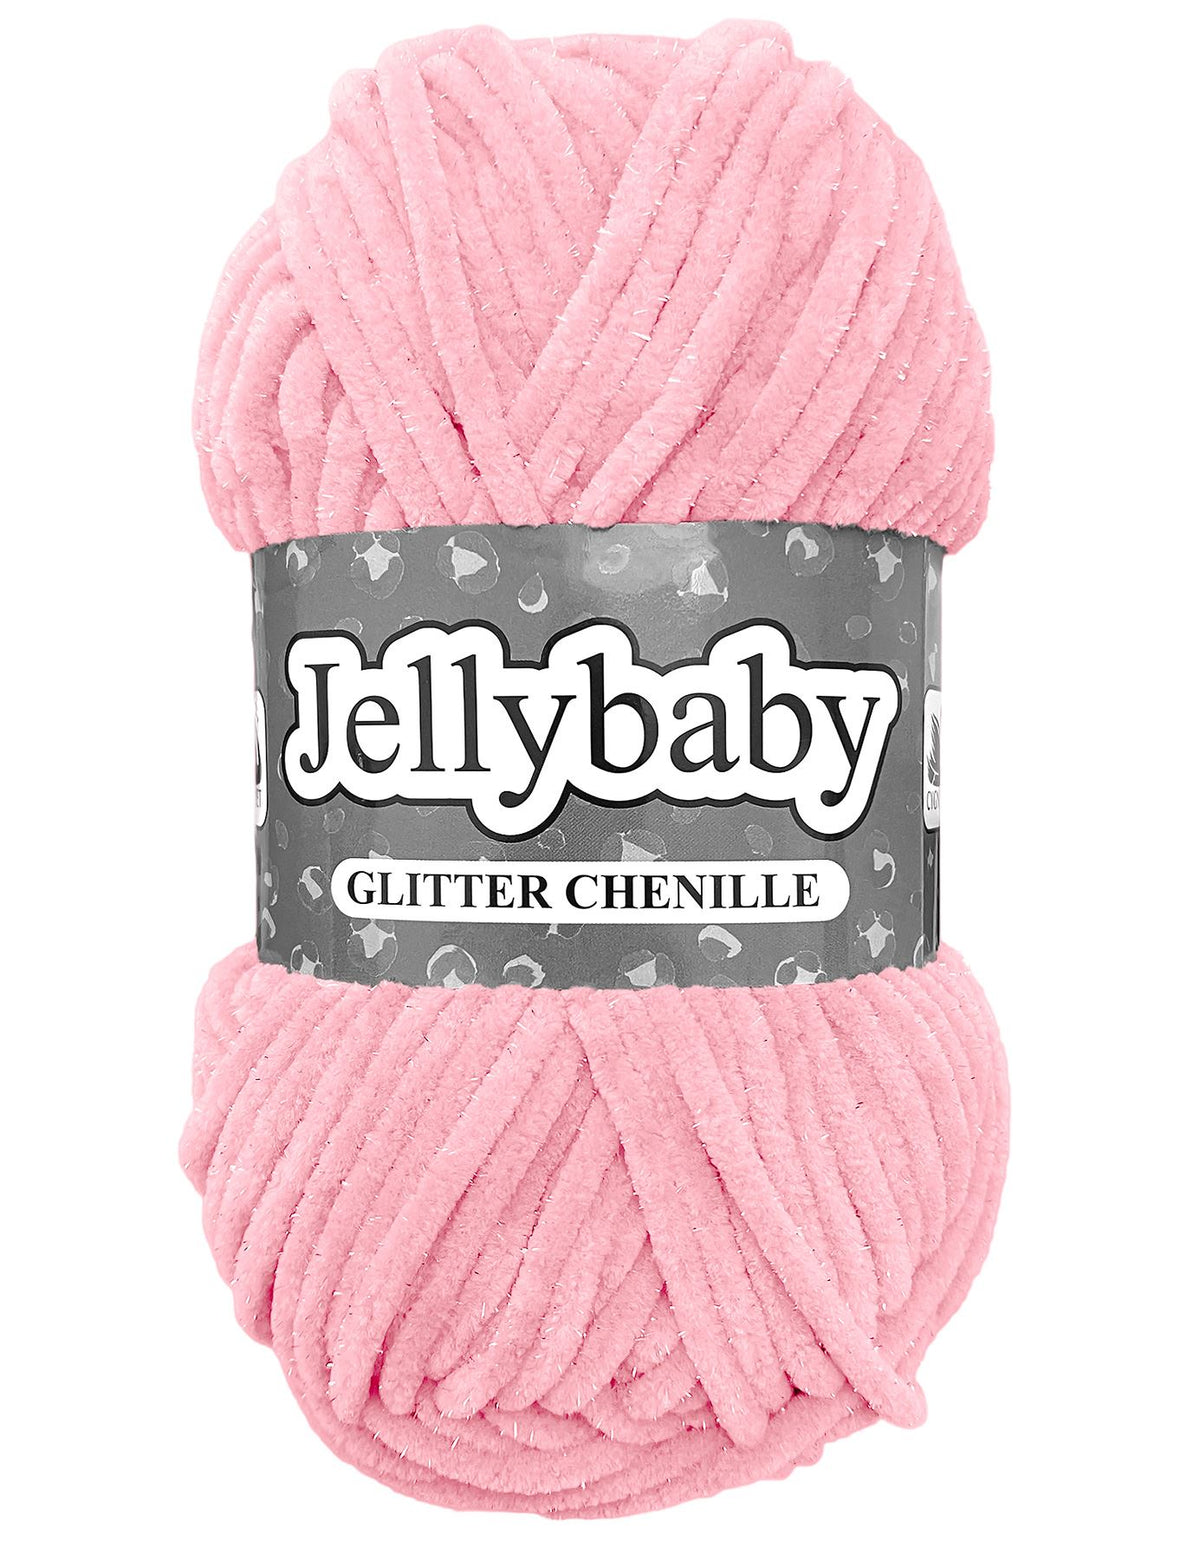 Cygnet Jellybaby Glitter Chenille Fairydust (014) -100g